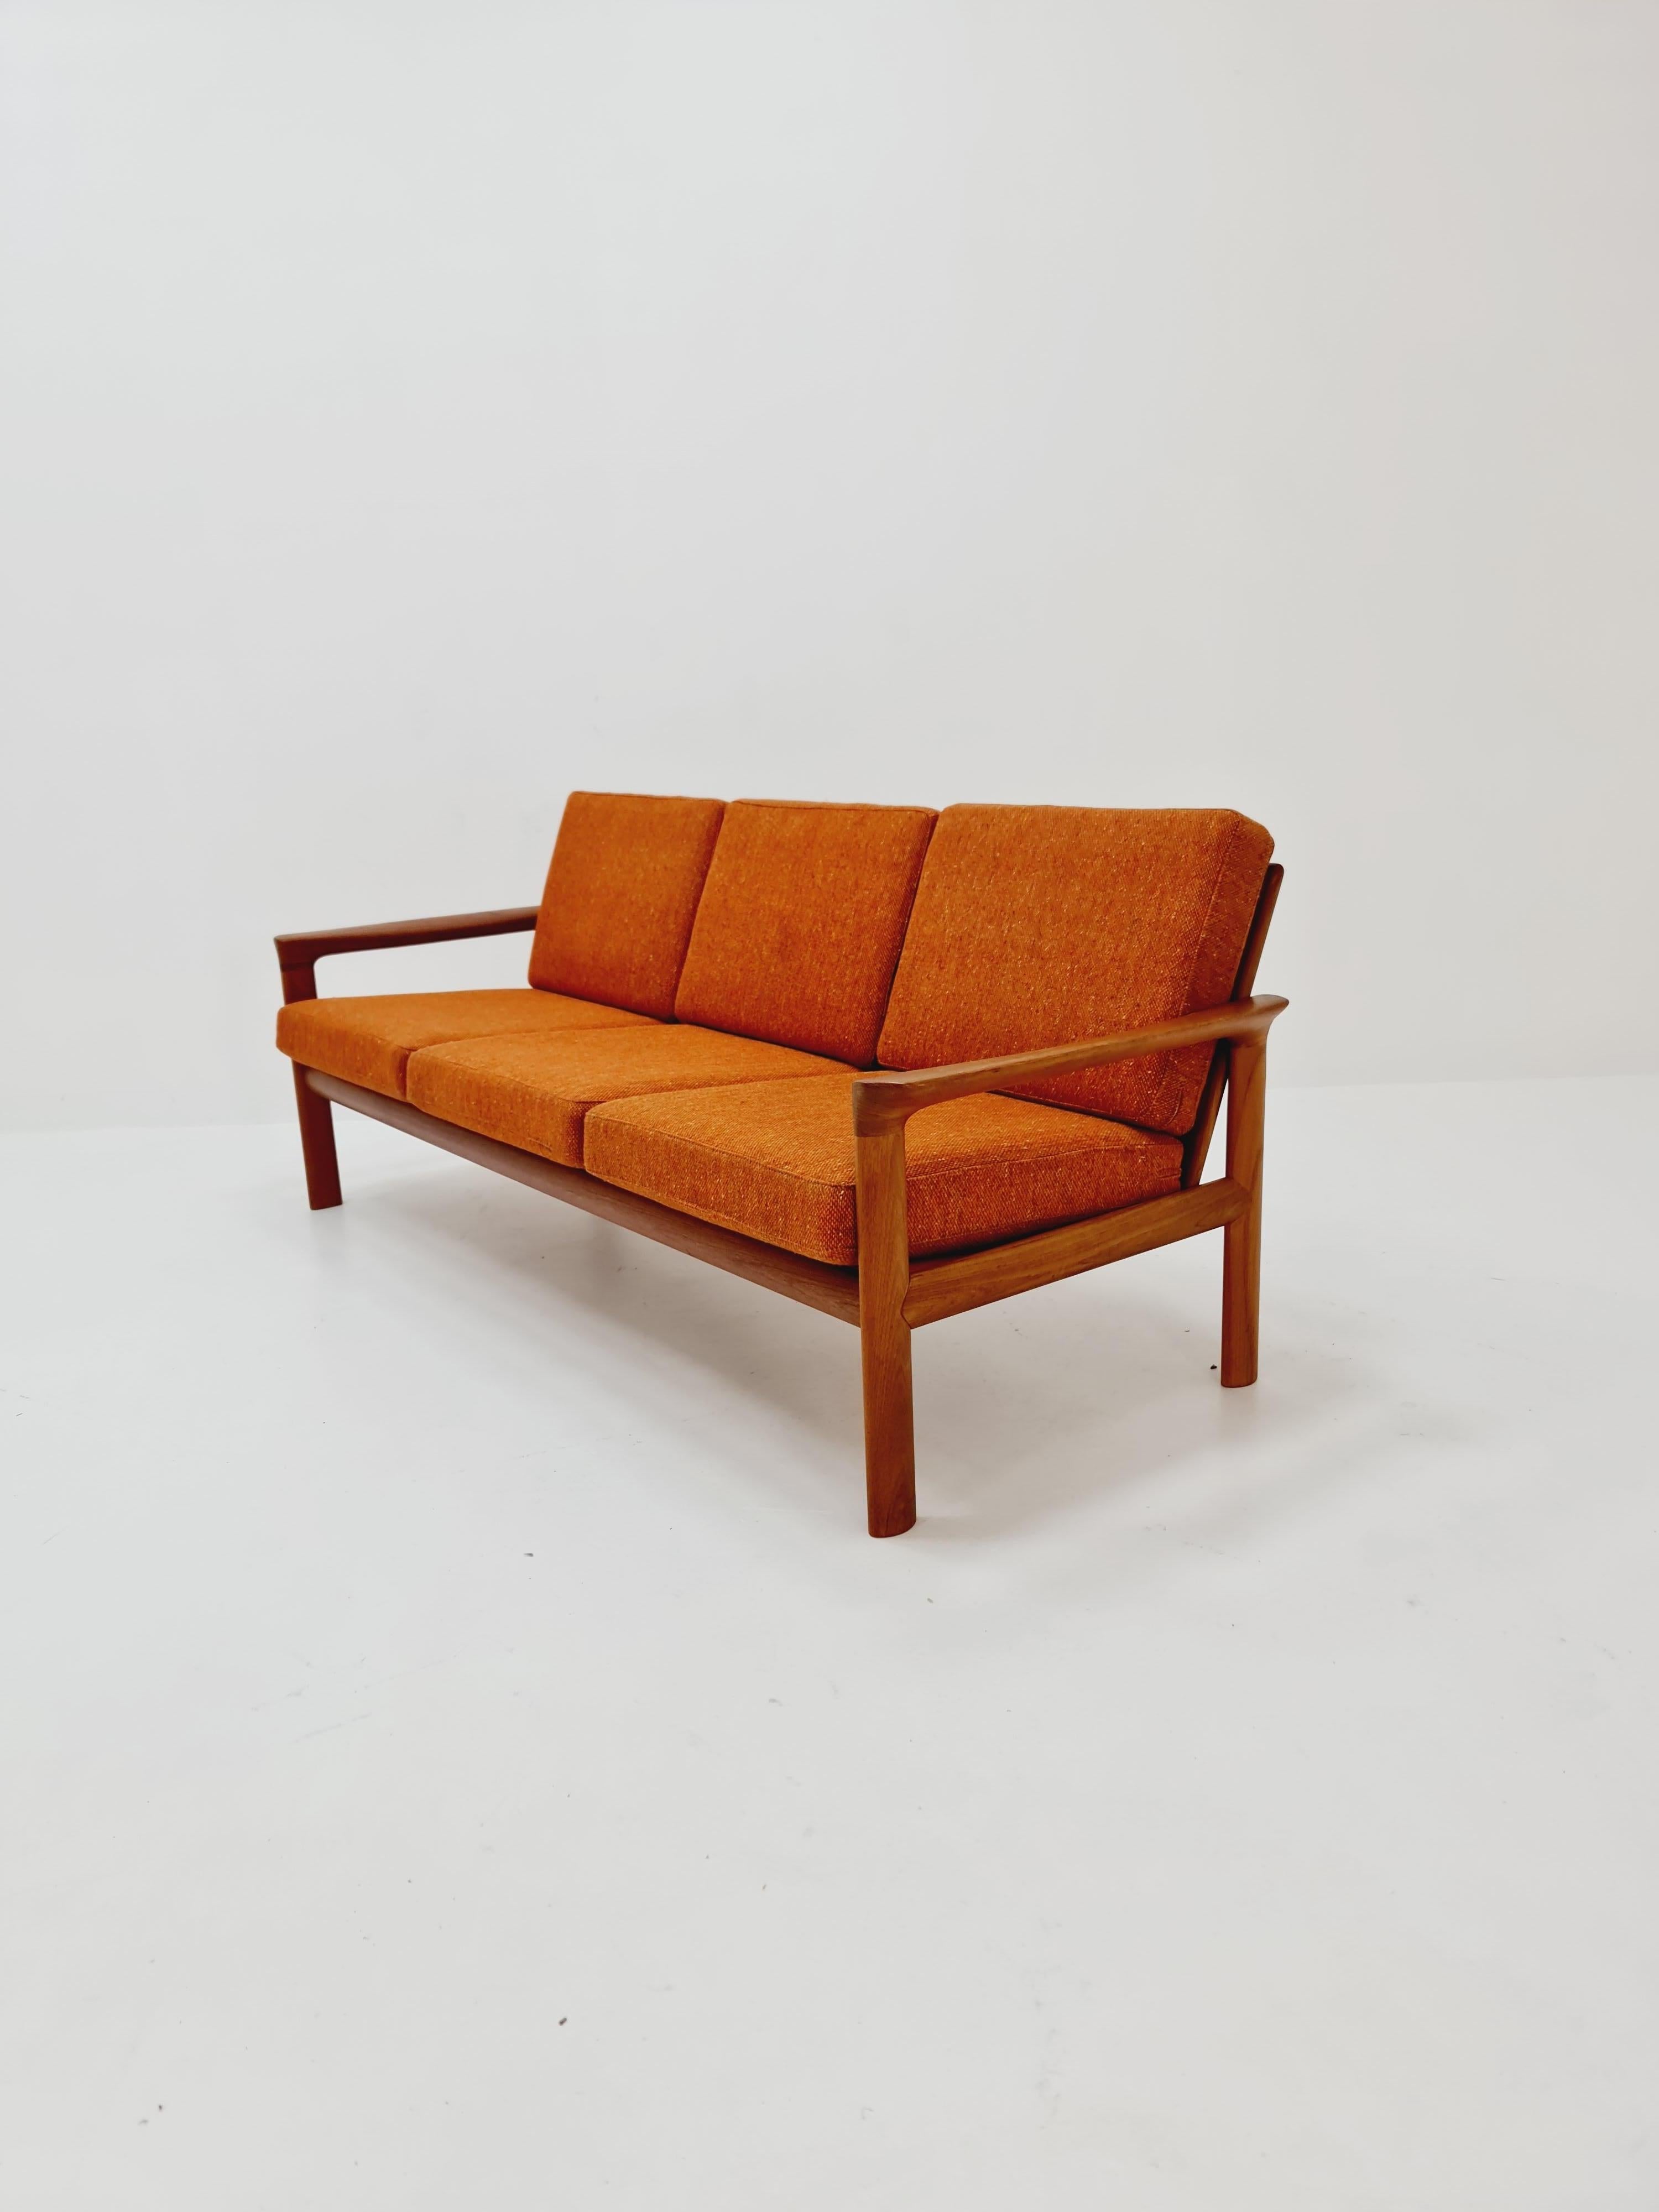 Mid century easy lounge couch by Sven ellekaer for komfort teak  5